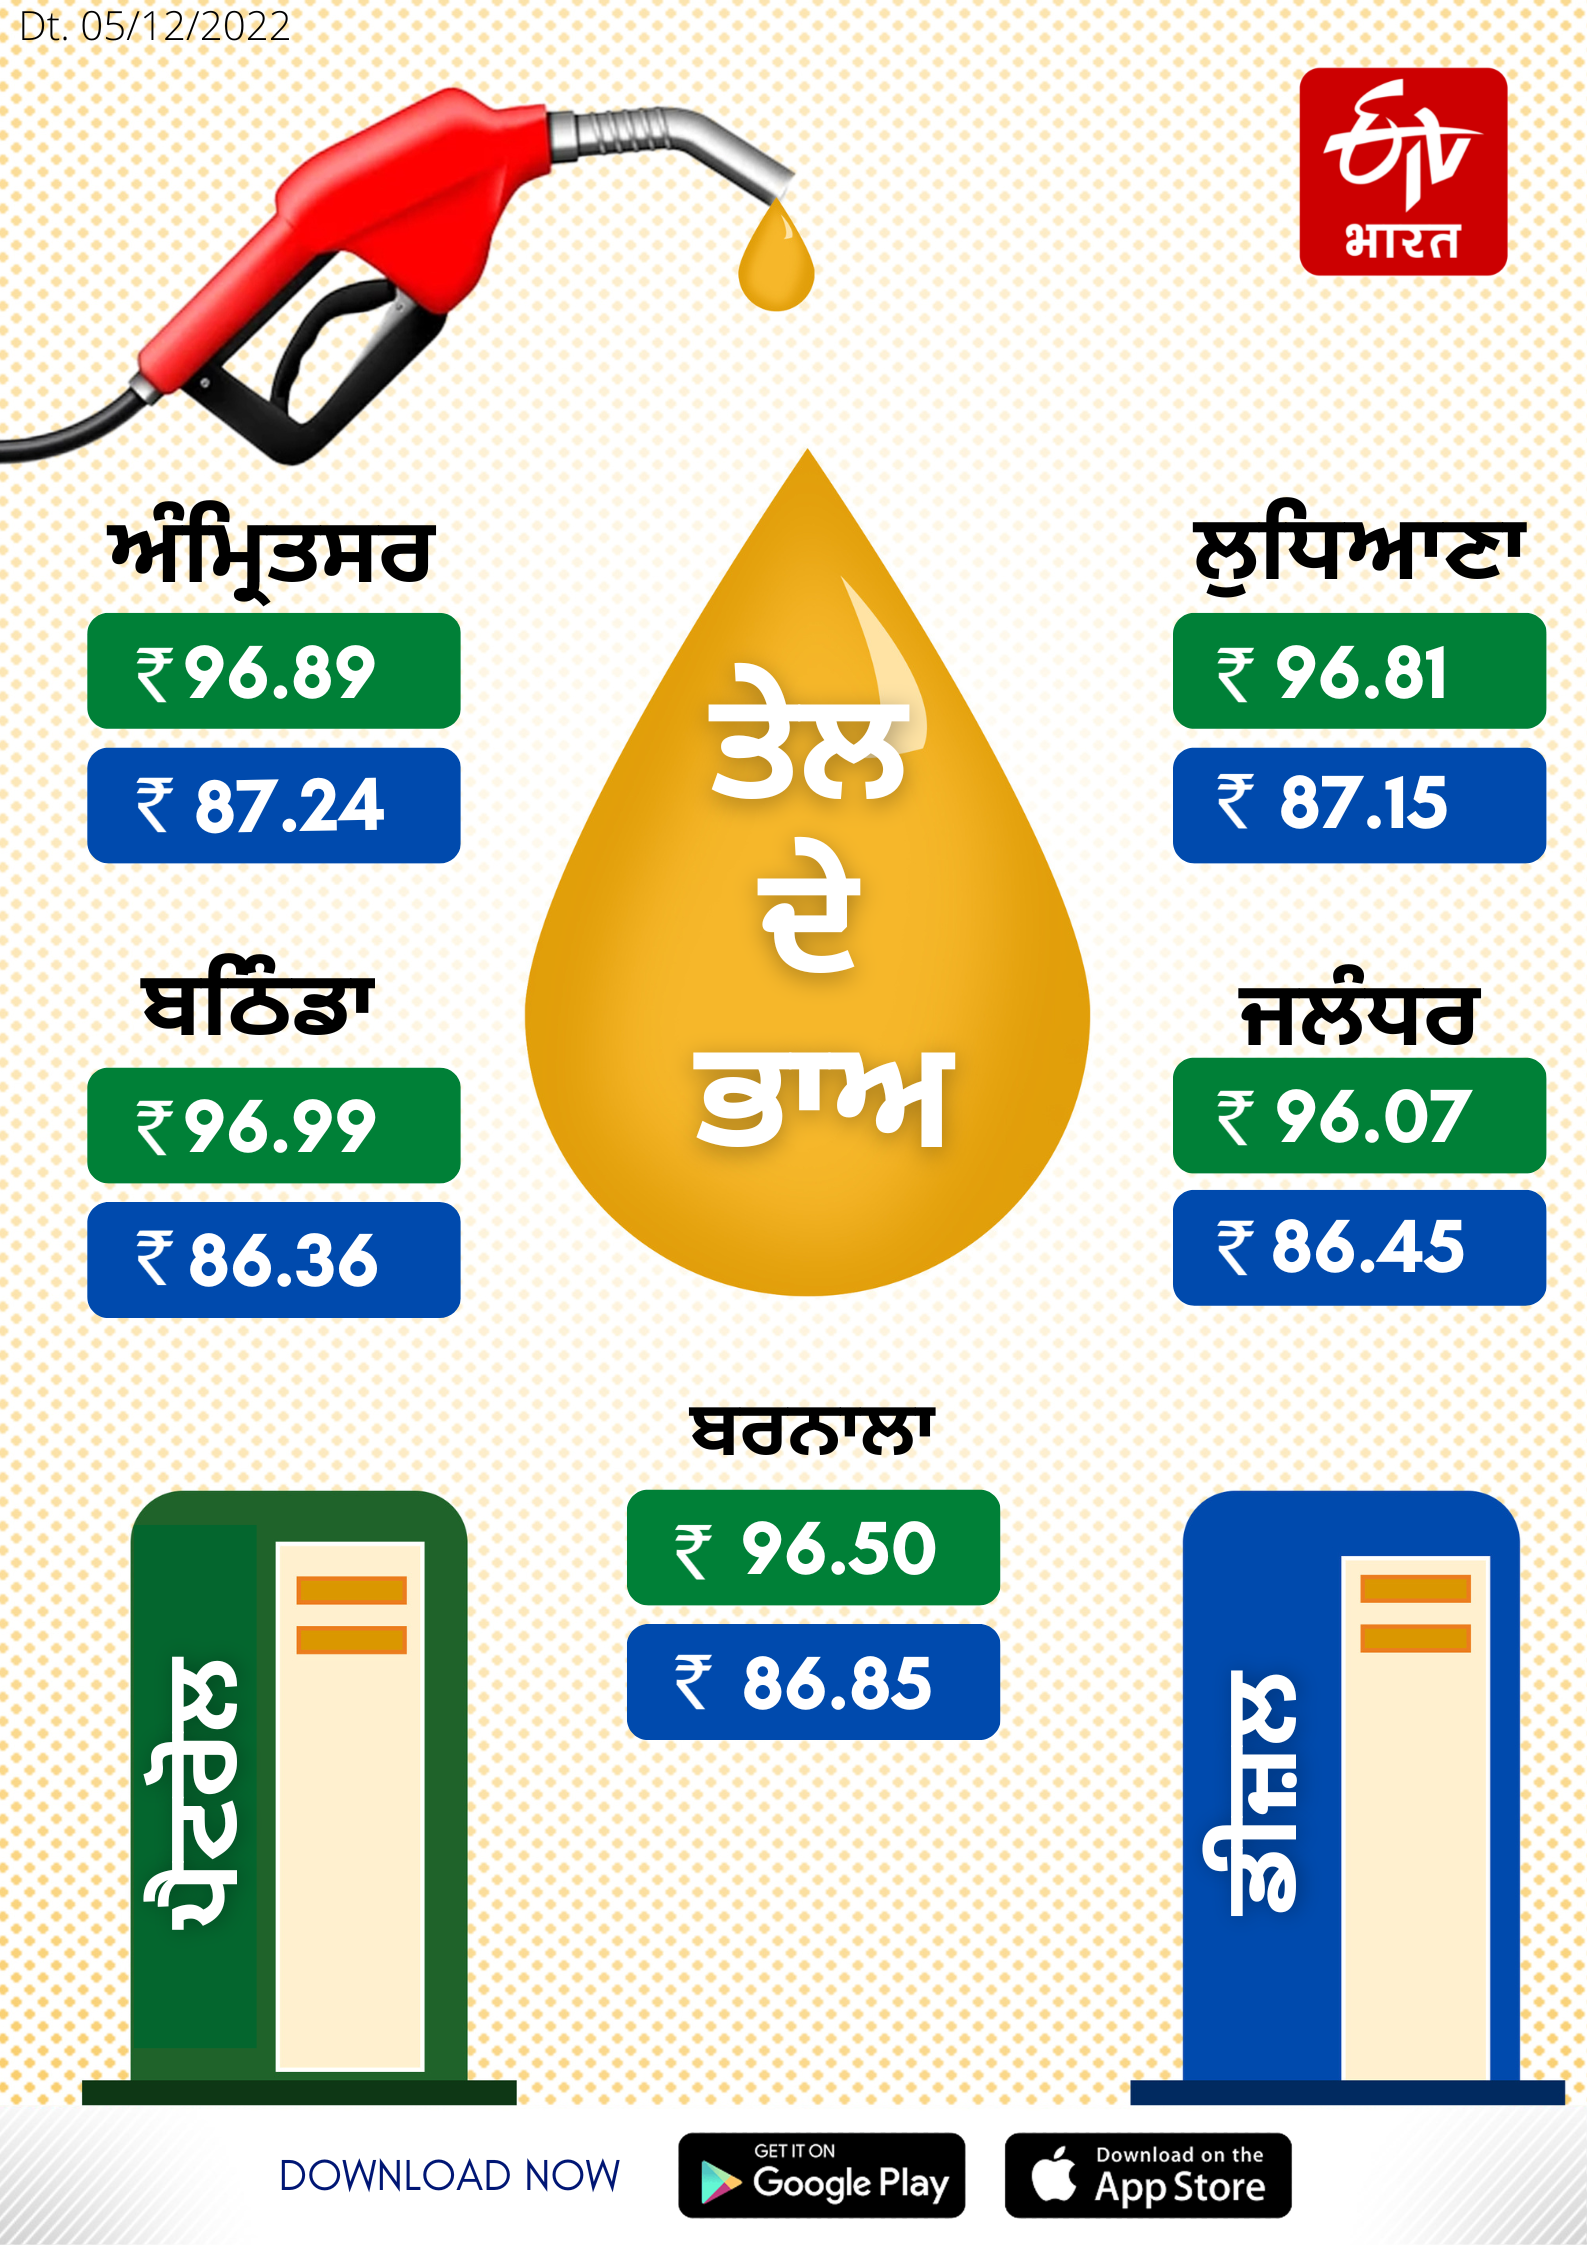 Petrol and diesel rates in Punjab on December 5